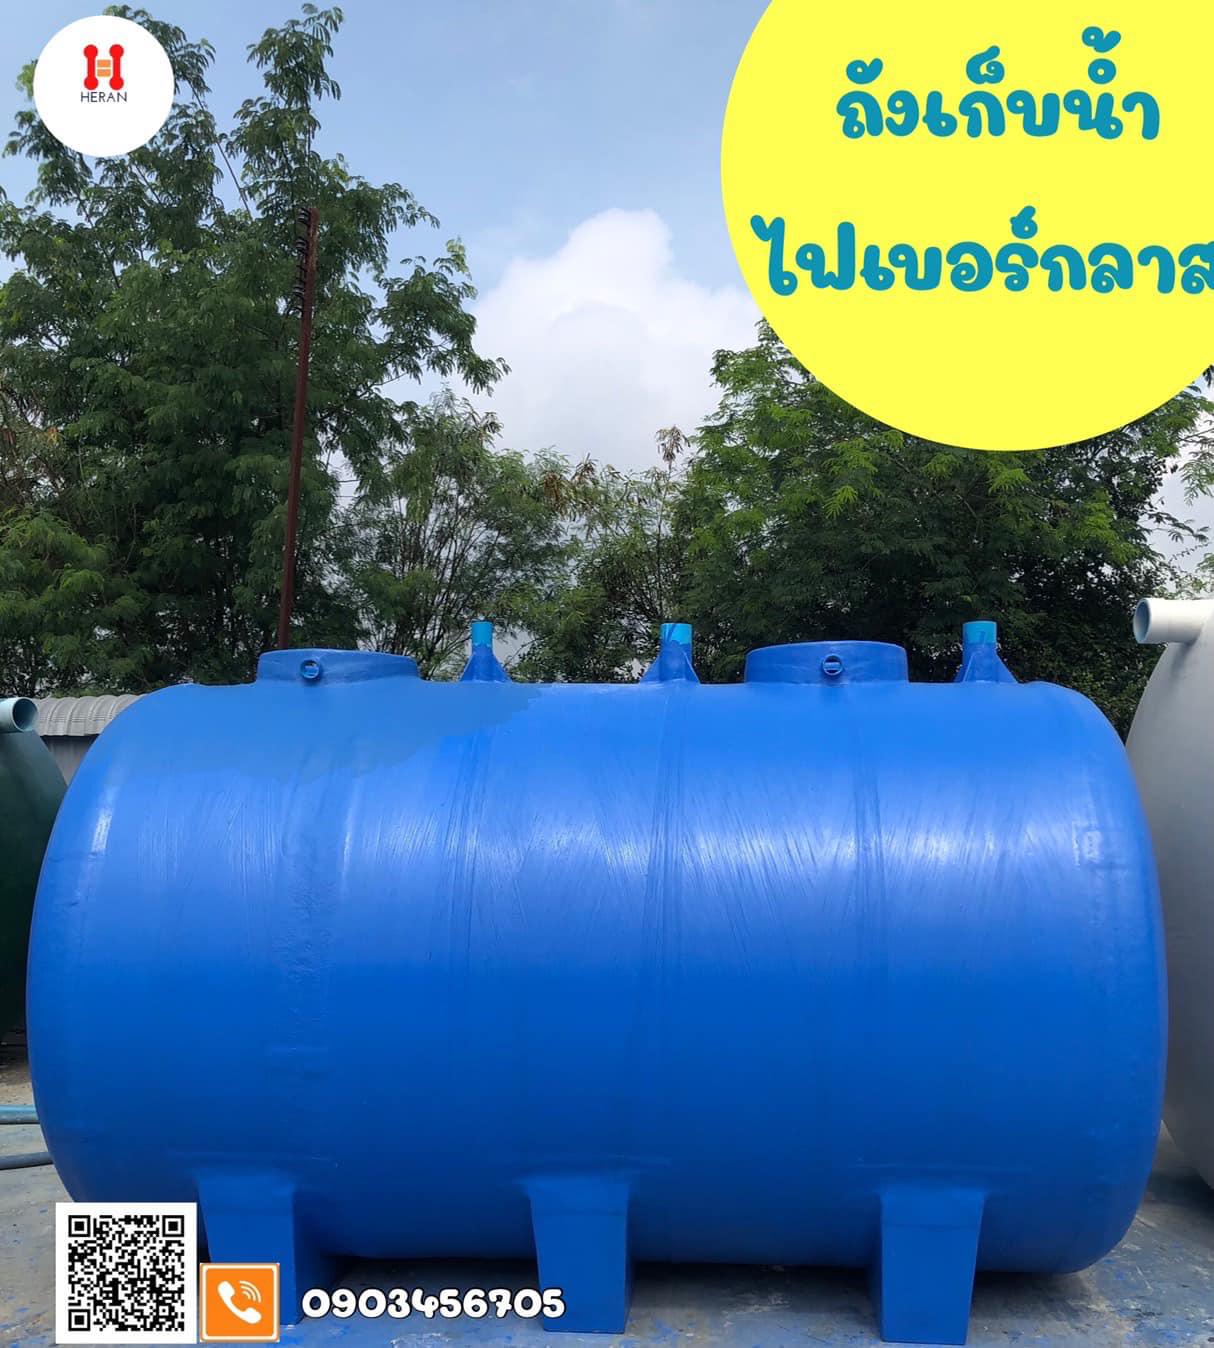 Production of horizontal capsule-shaped fiberglass water tanks